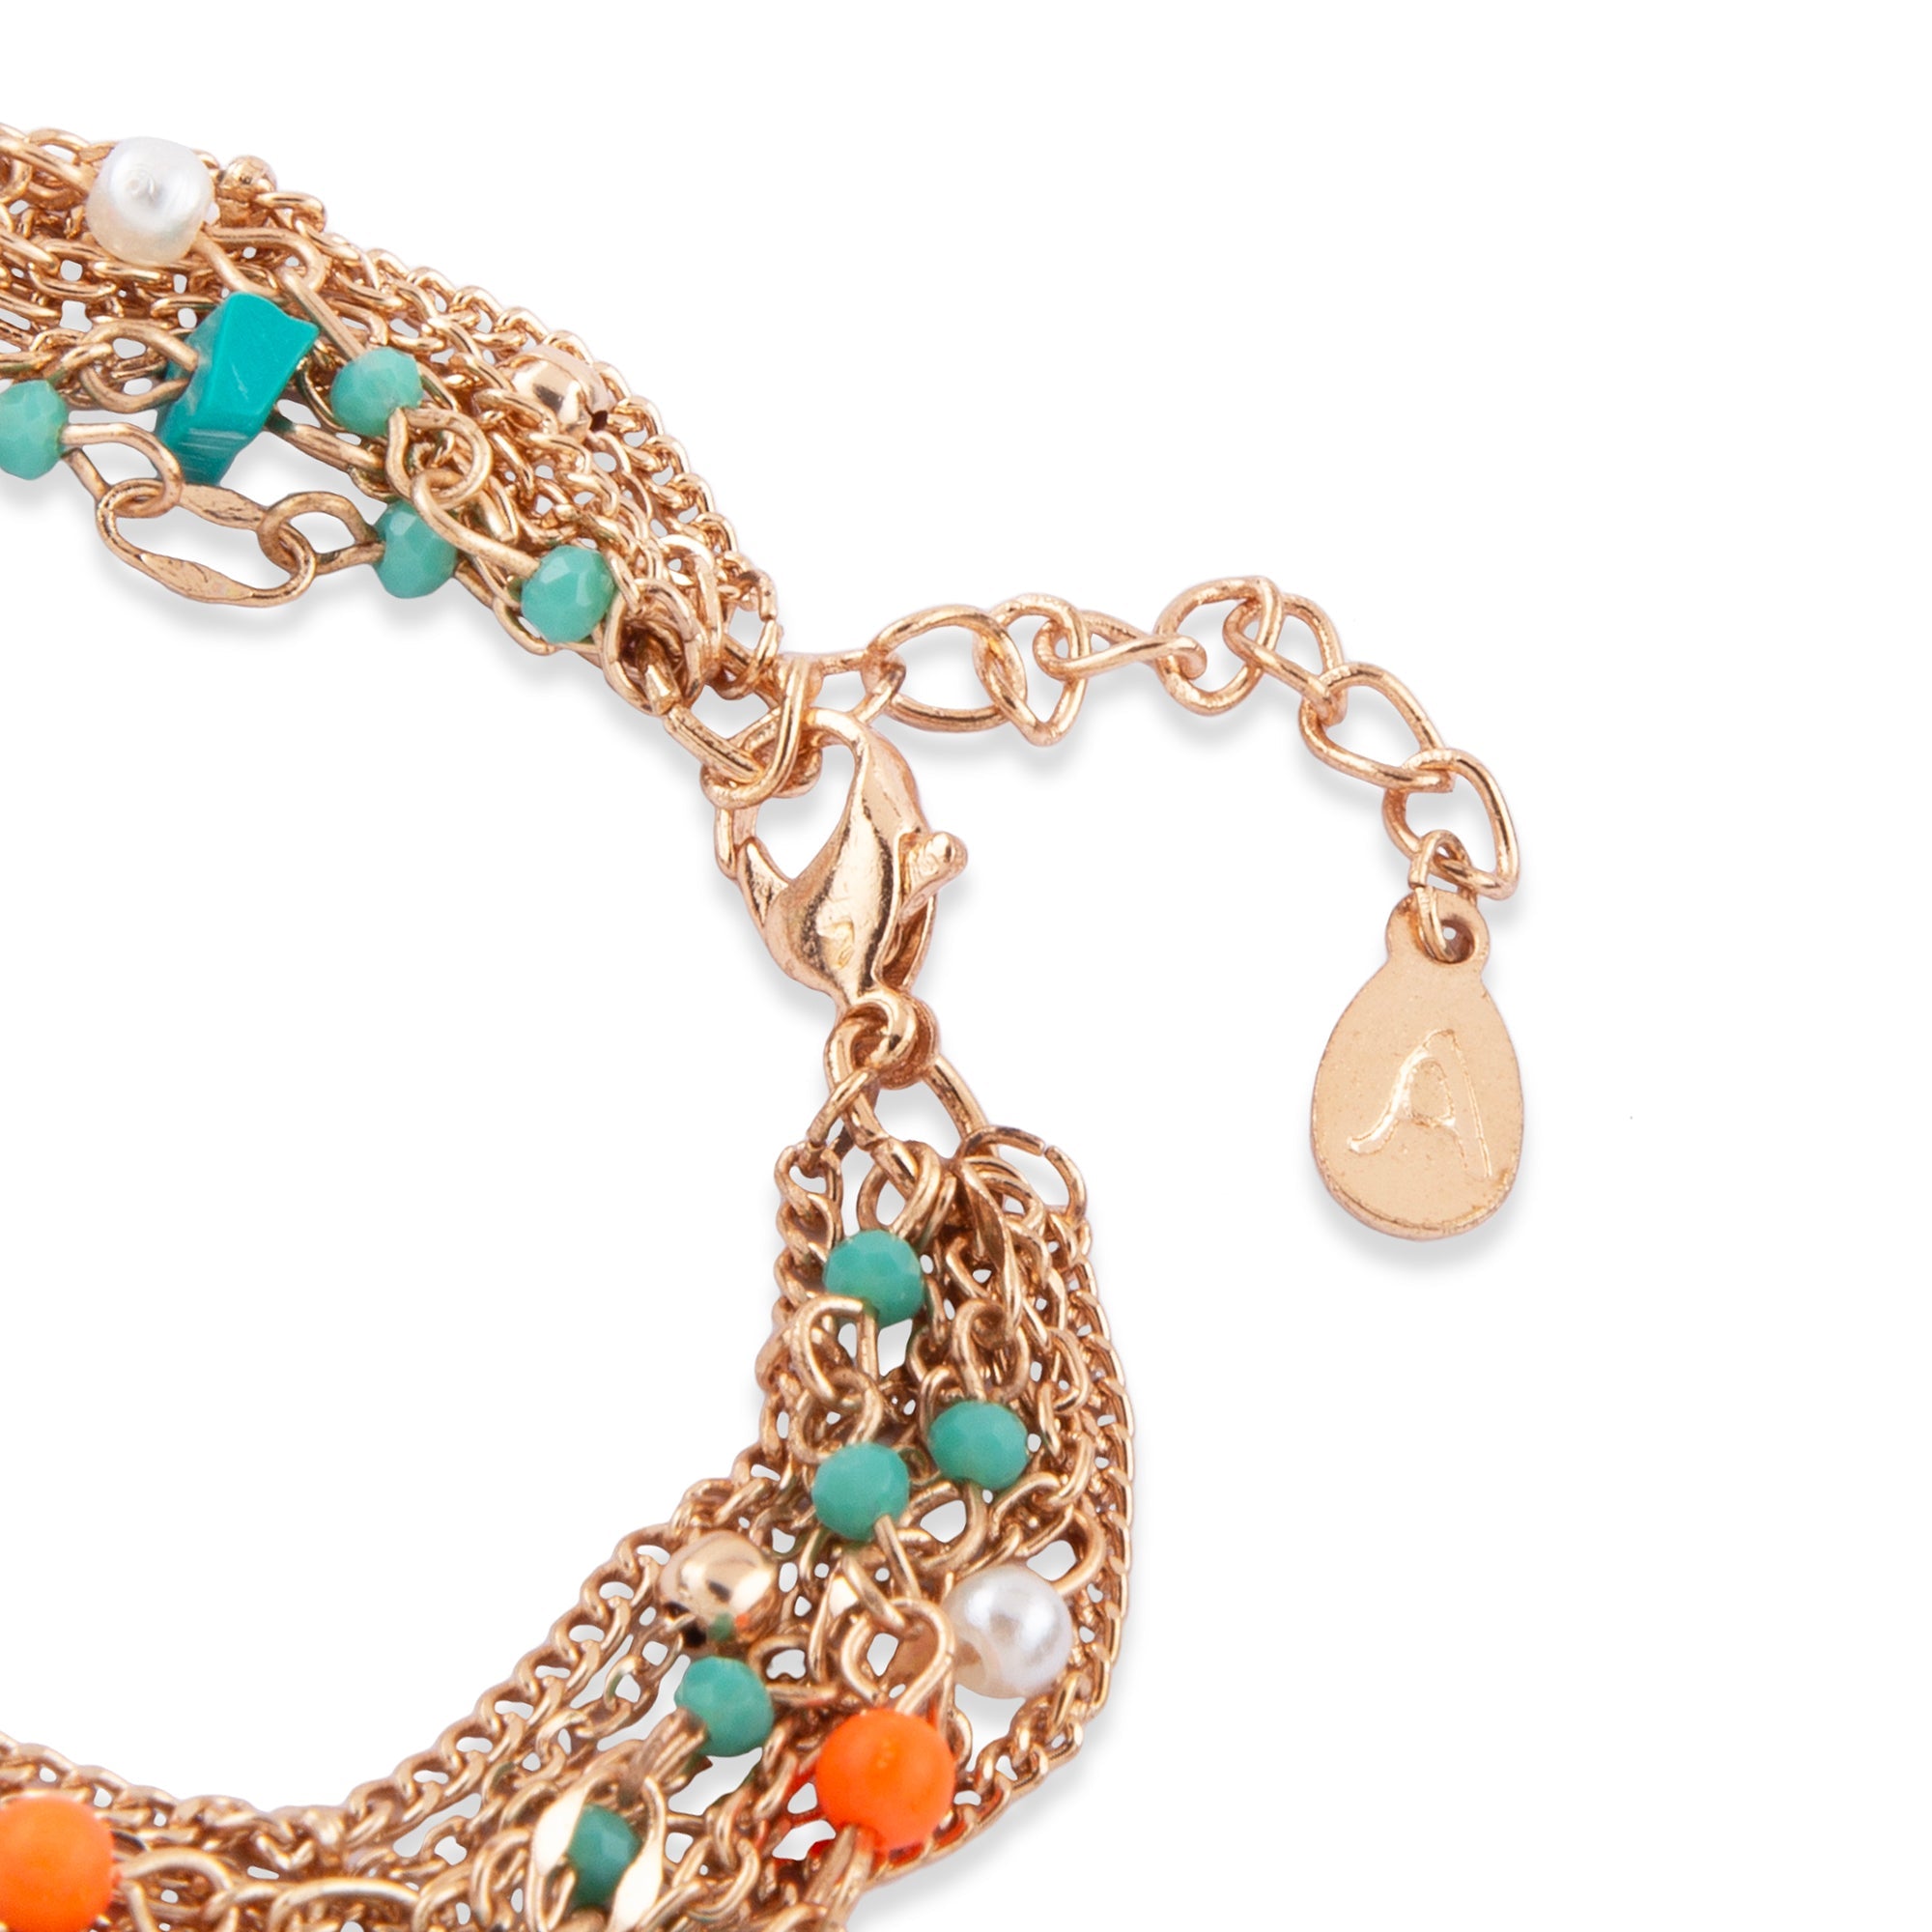 Accessorize London Women's Beaded Chain Clasp Bracelet